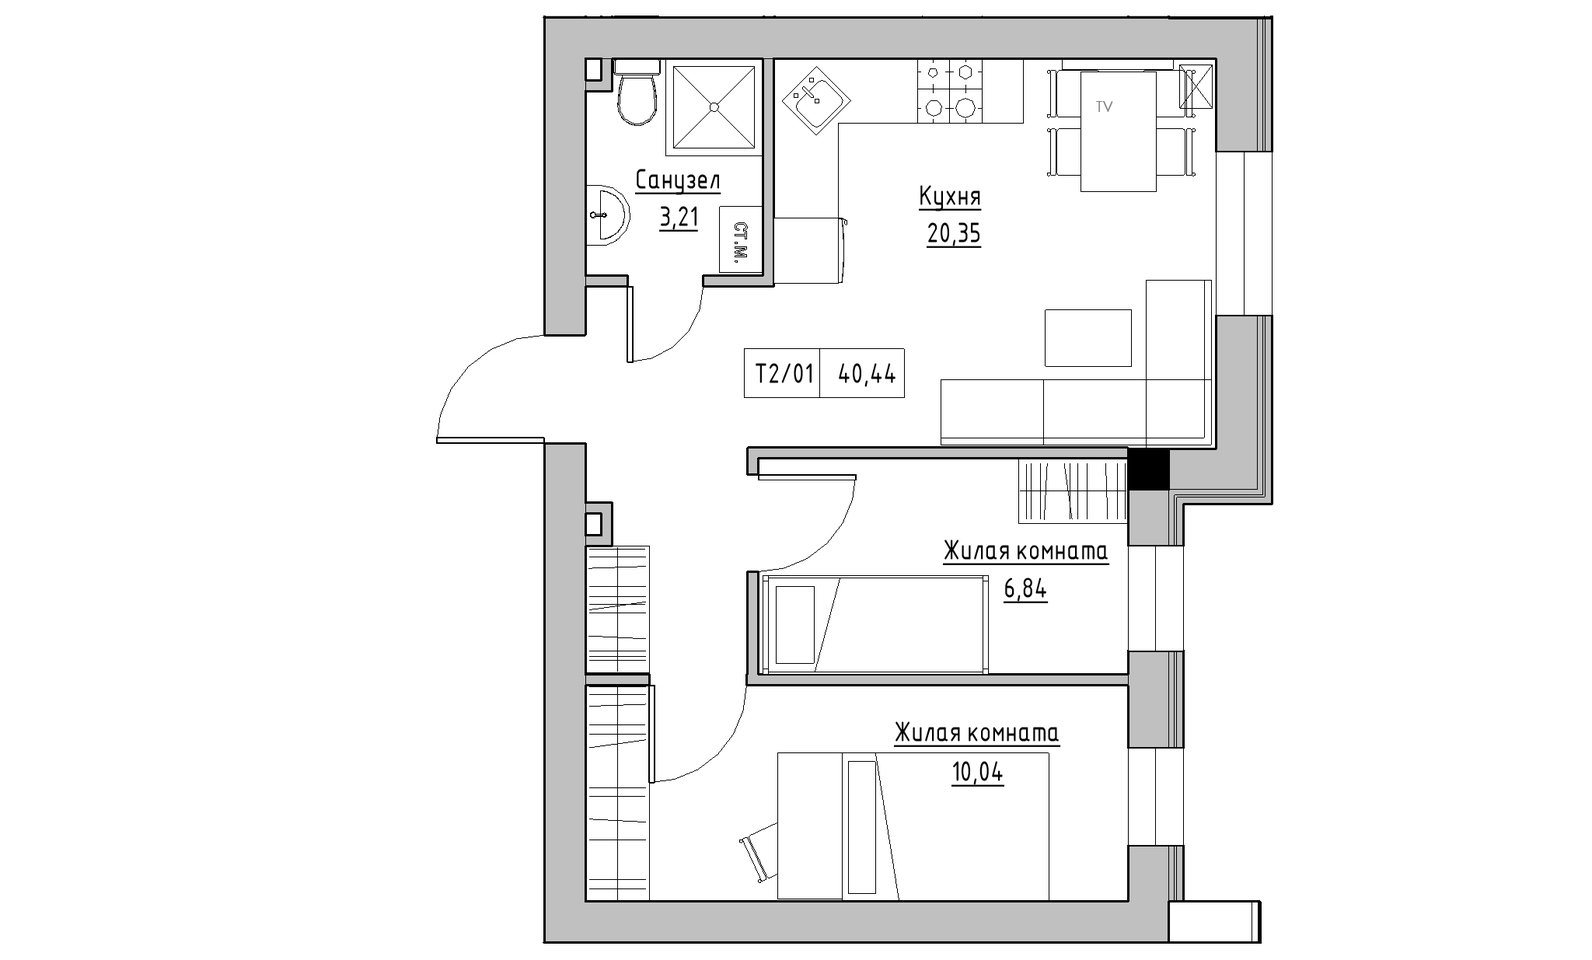 Planning 2-rm flats area 40.44m2, KS-014-01/0010.